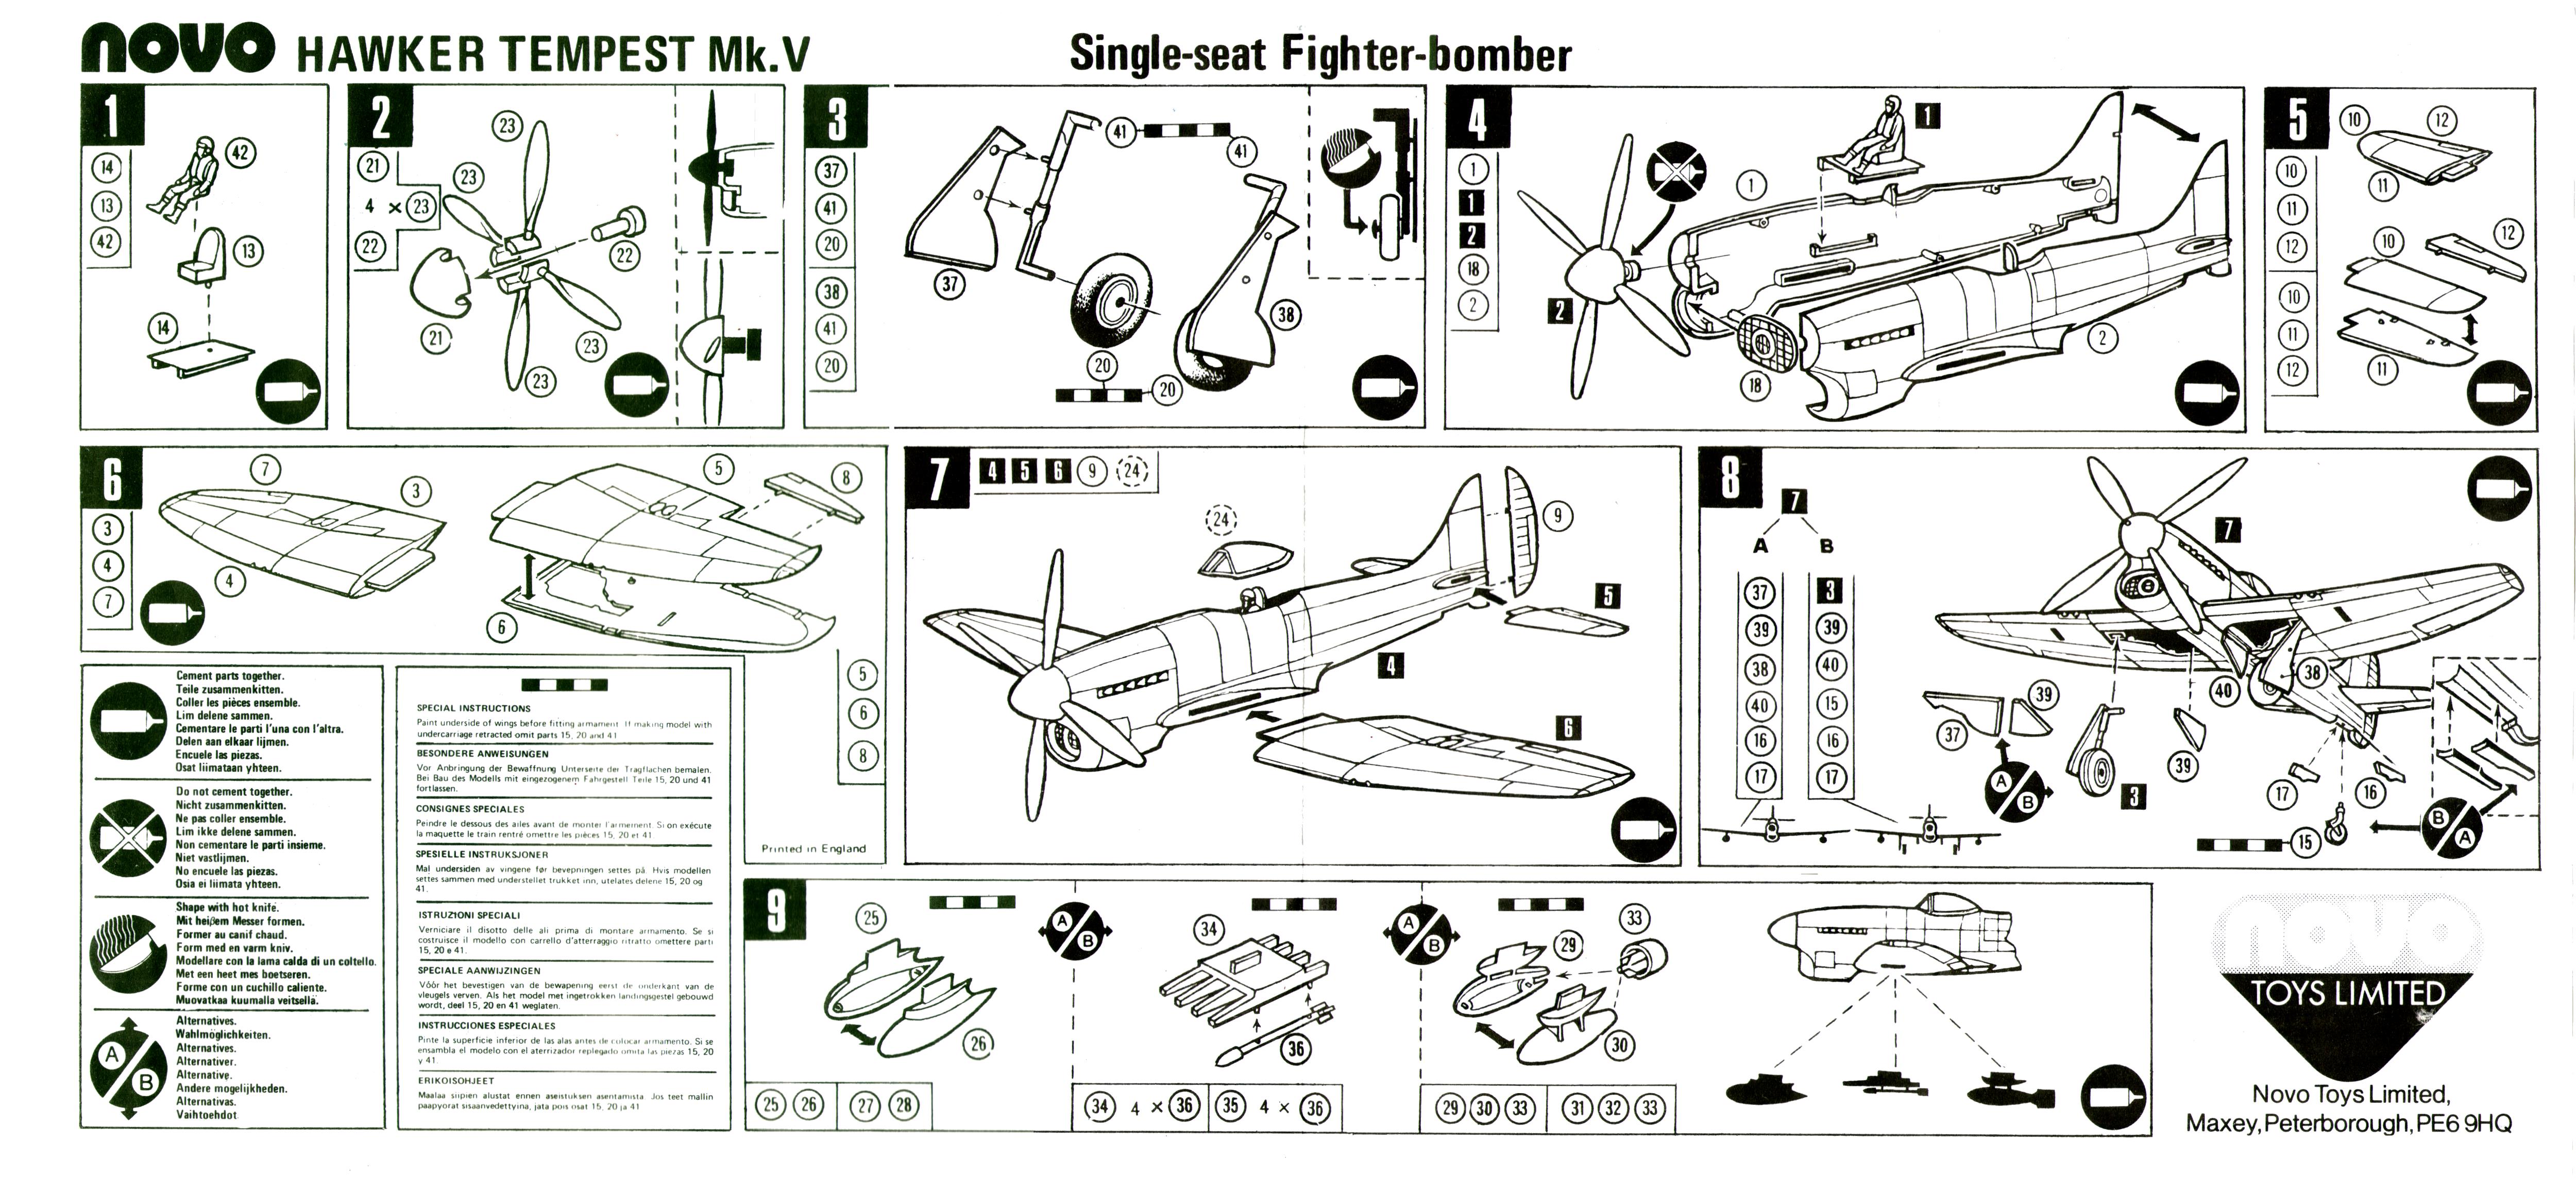 Инструкция по сборке NOVO F212 Hawker Tempest Mk.V 